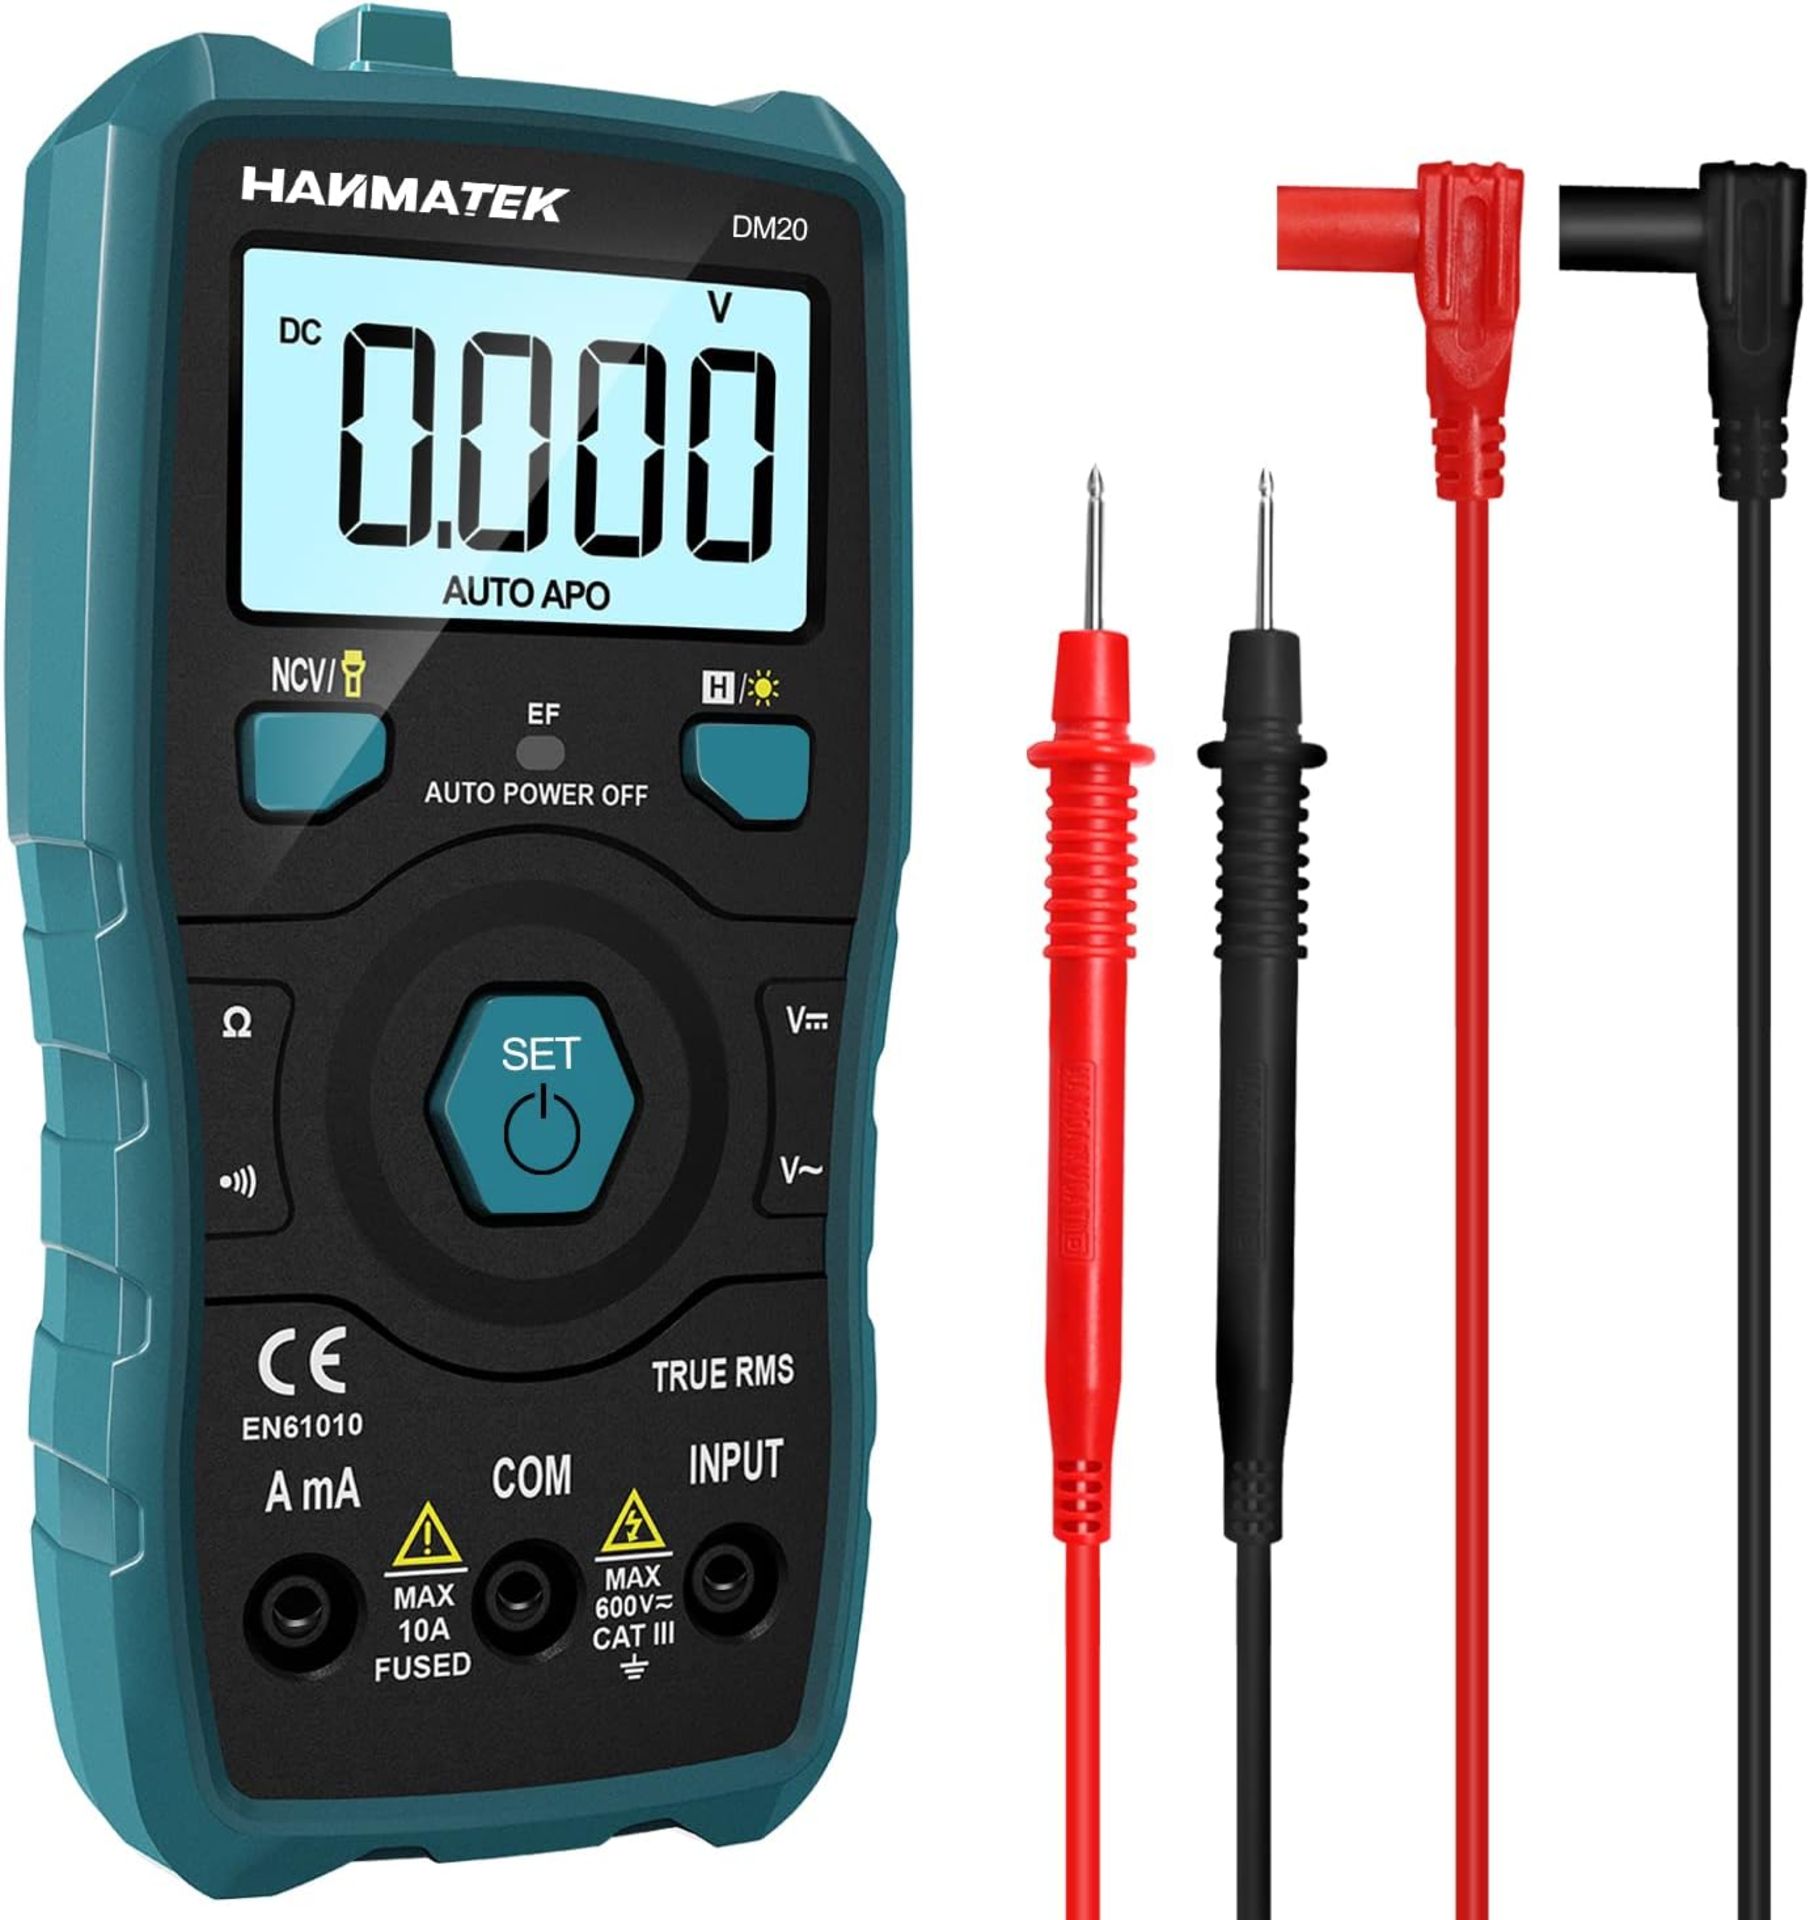 Lot of 2 Items, HANMATEK Non-Contact Voltage Tester and 1 x HANMATEK Multimeter